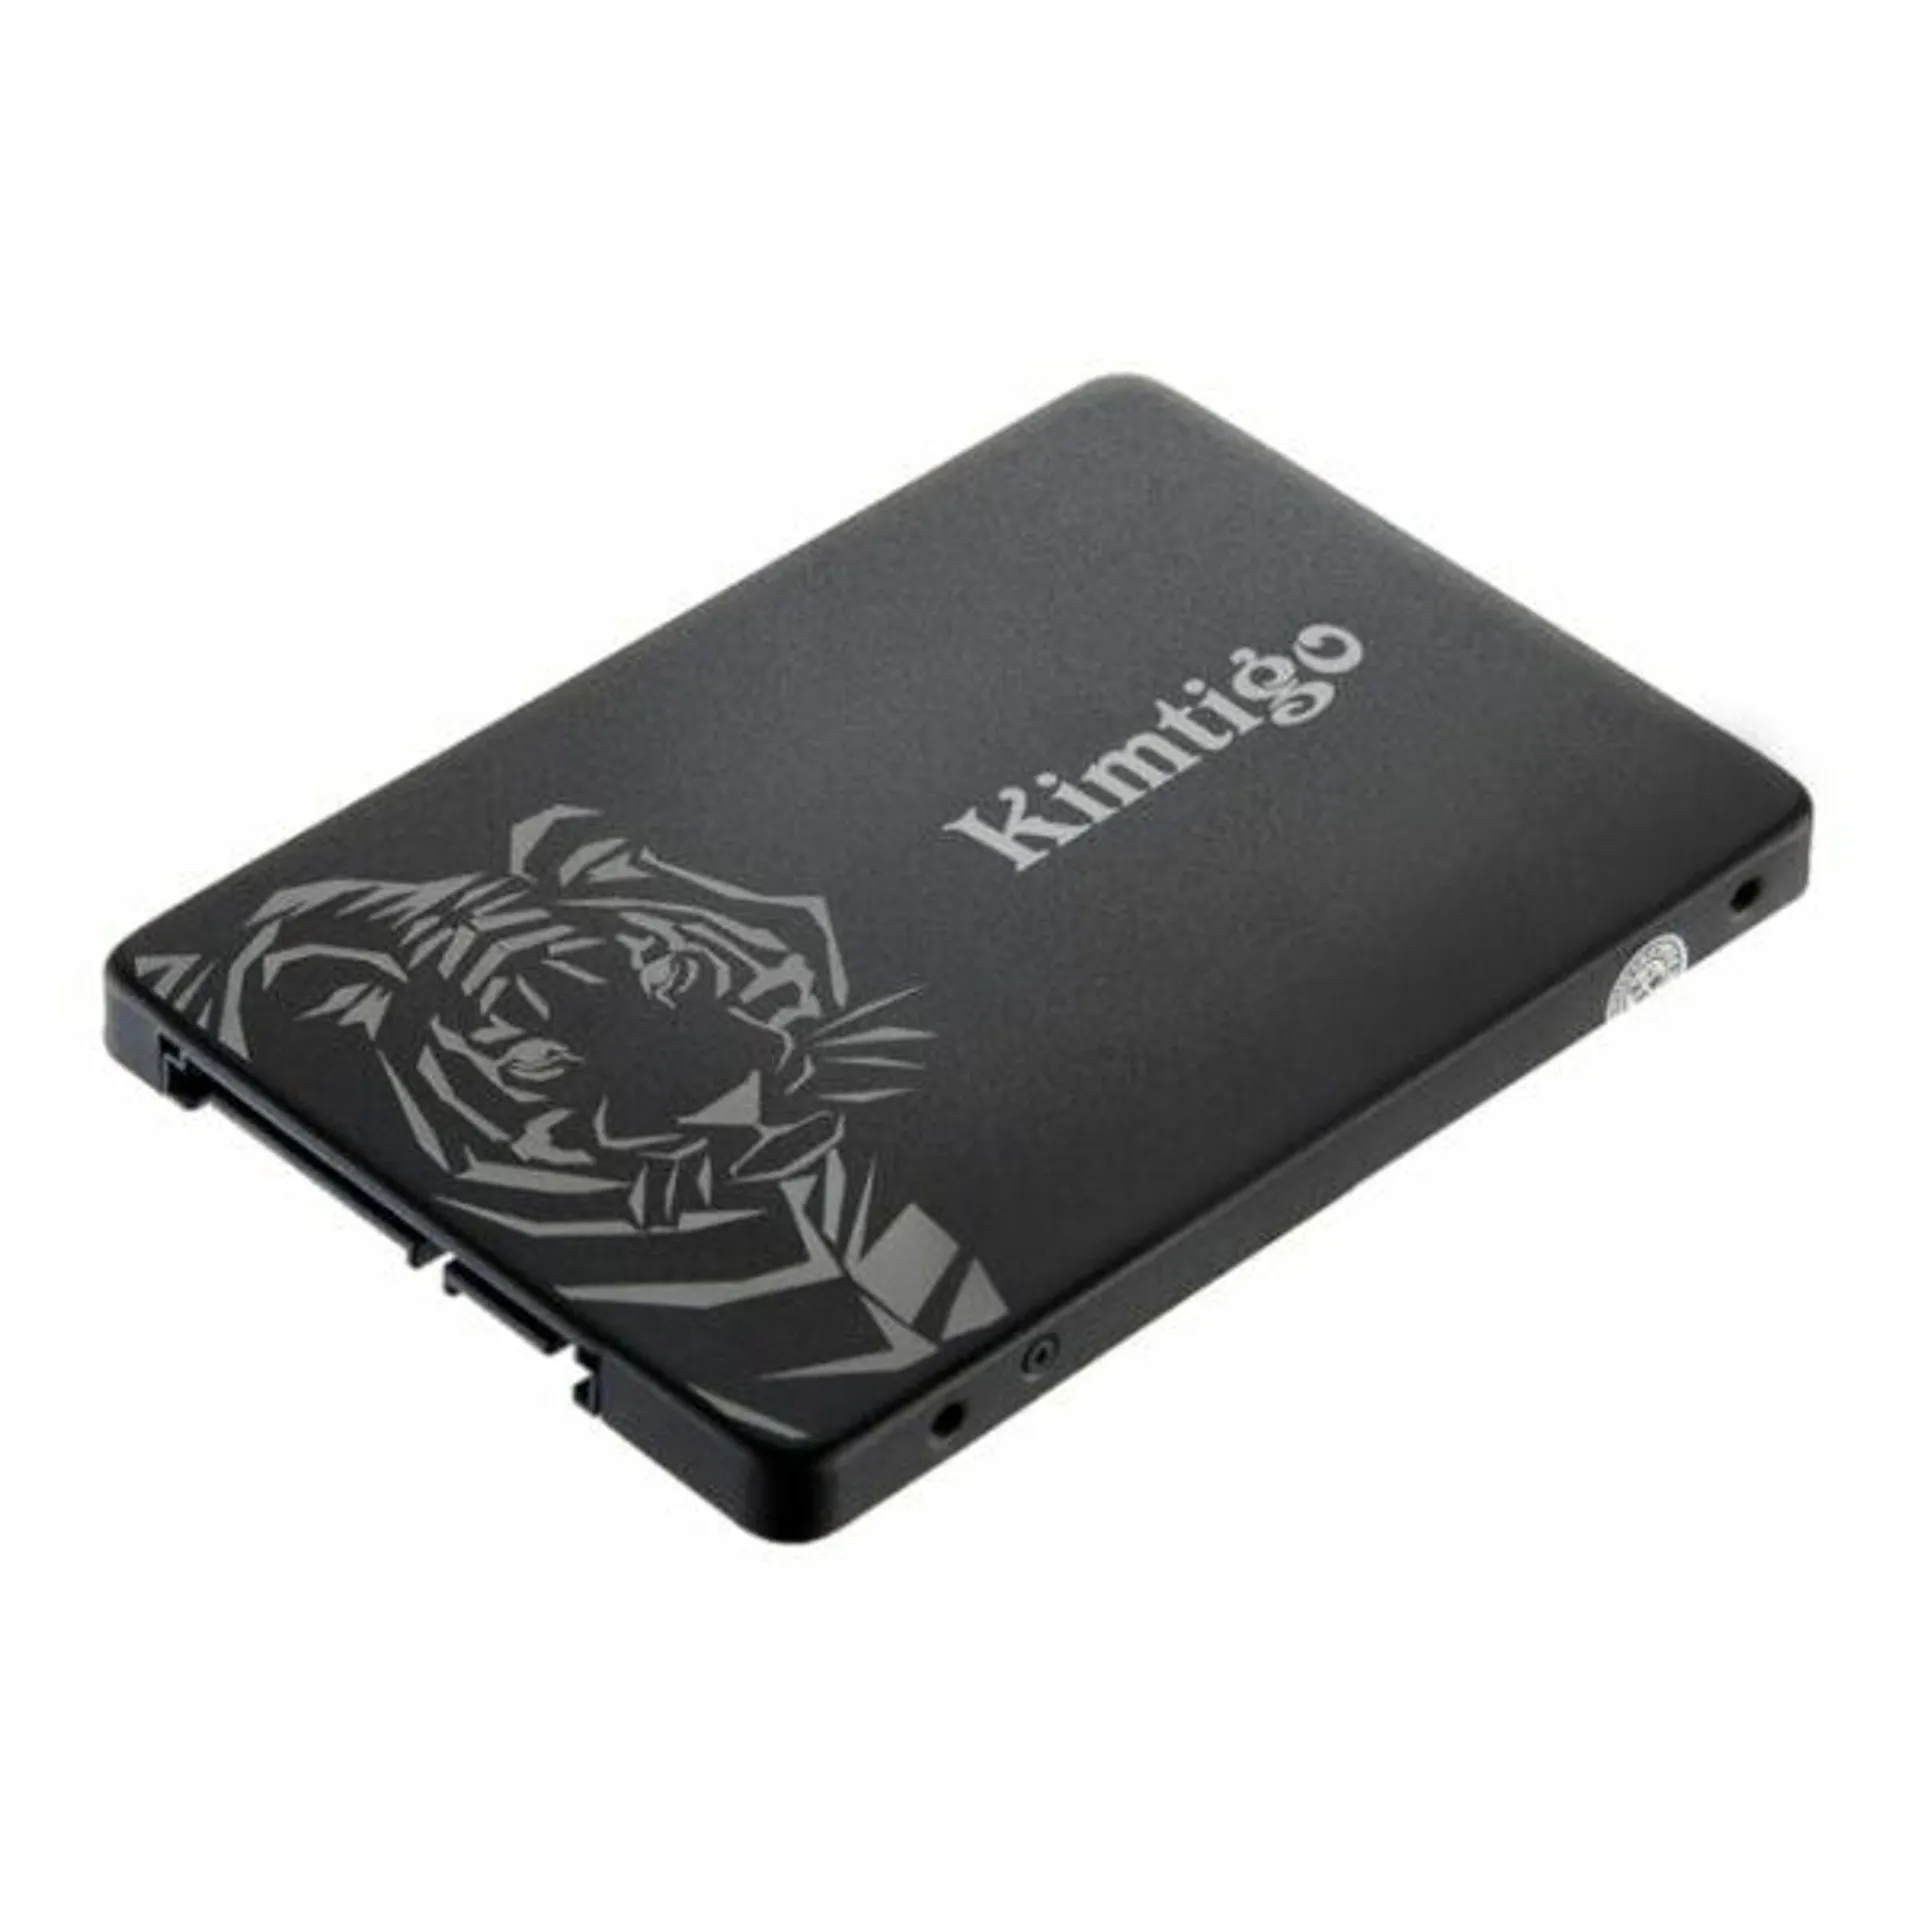 KIMTIGO K1000 1TB 2.5″ SSD